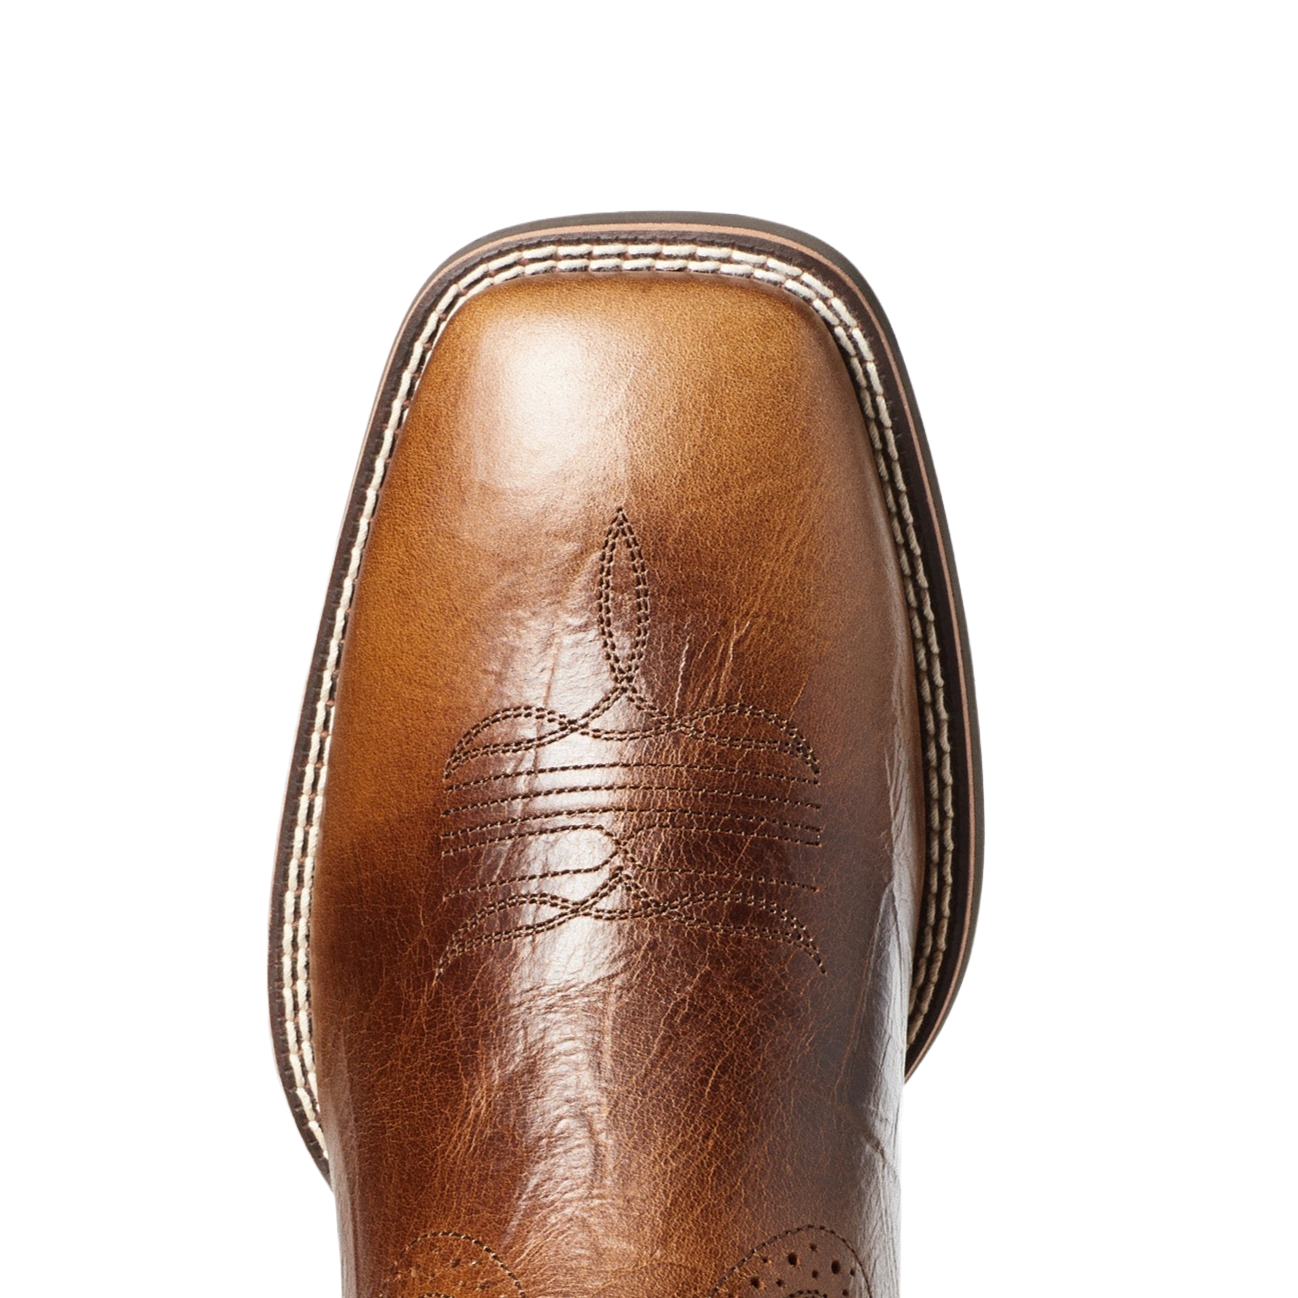 Ariat® Men's Sport Western Peanut Butter Square Toe Boots 10035996